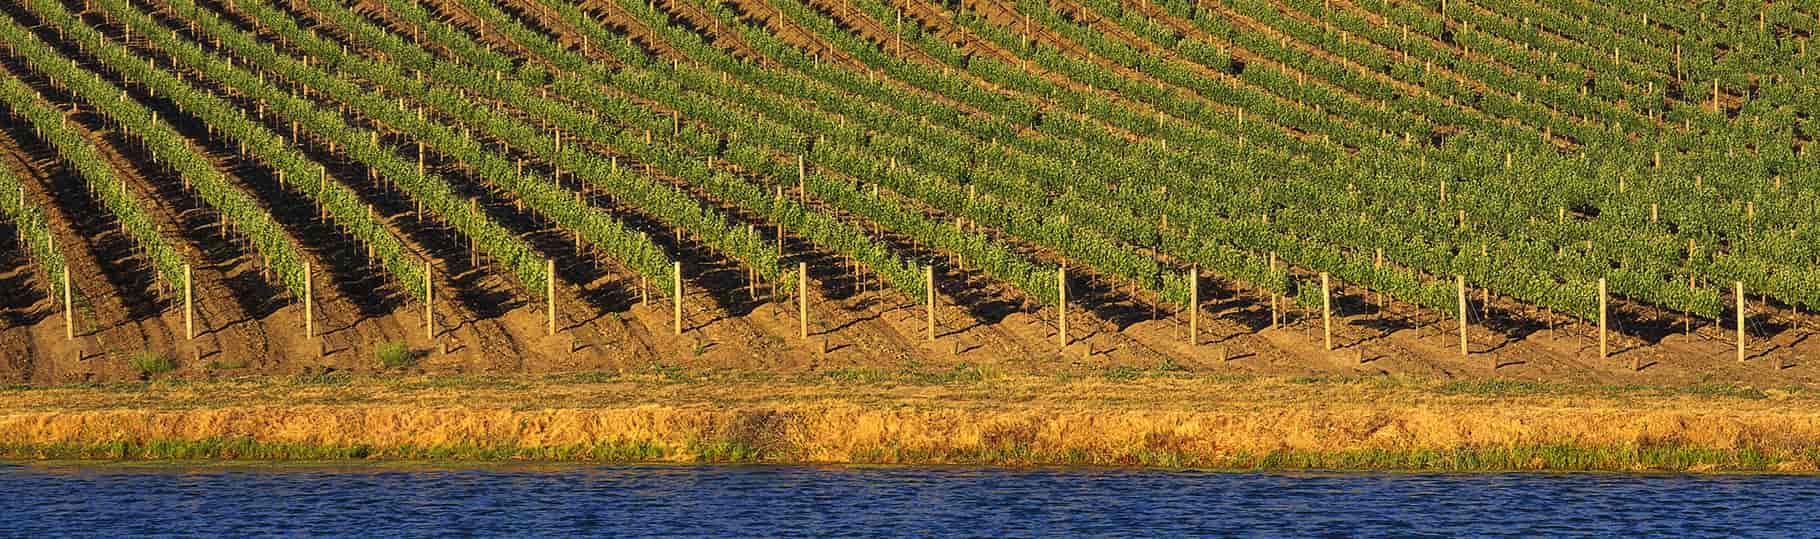 Vineyard at edge of water